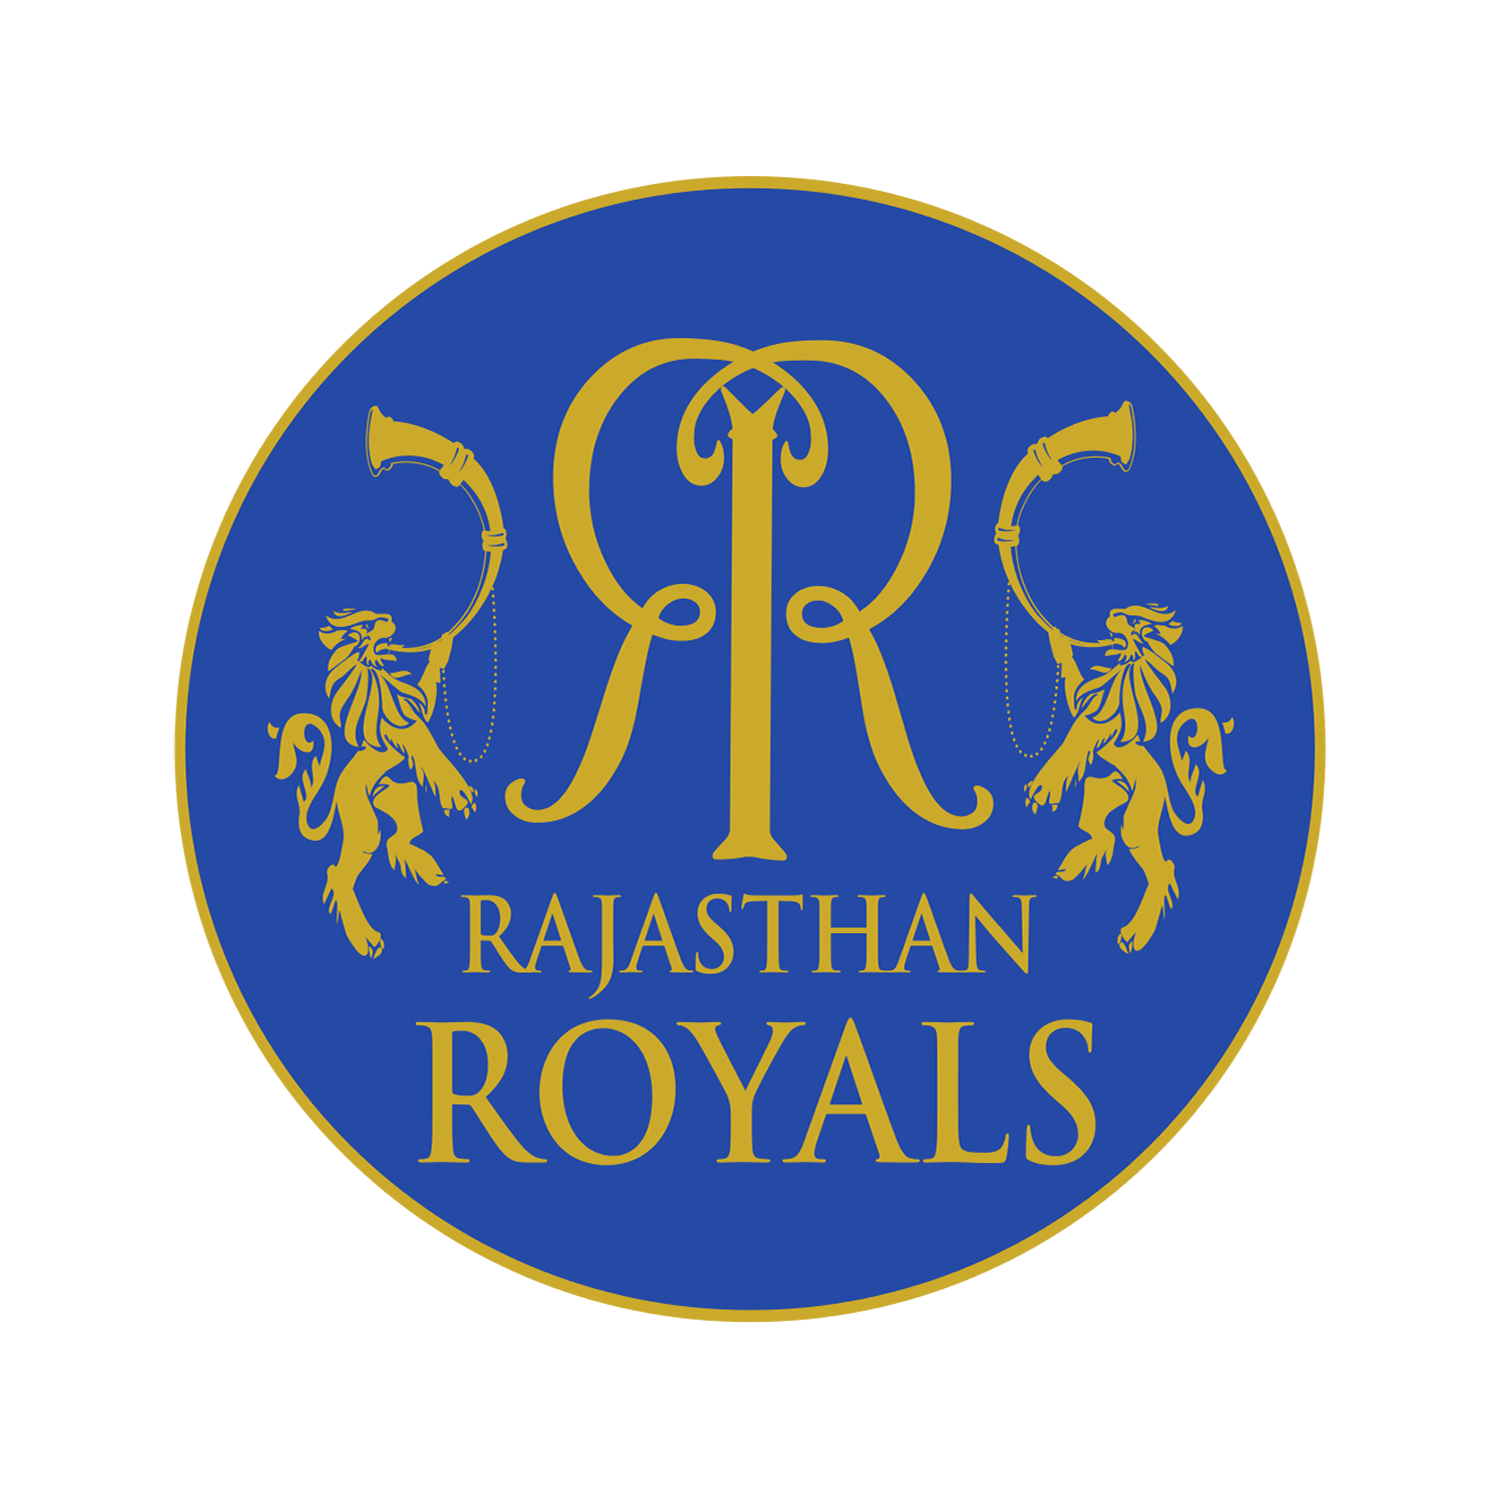 Rajasthan Royals Image